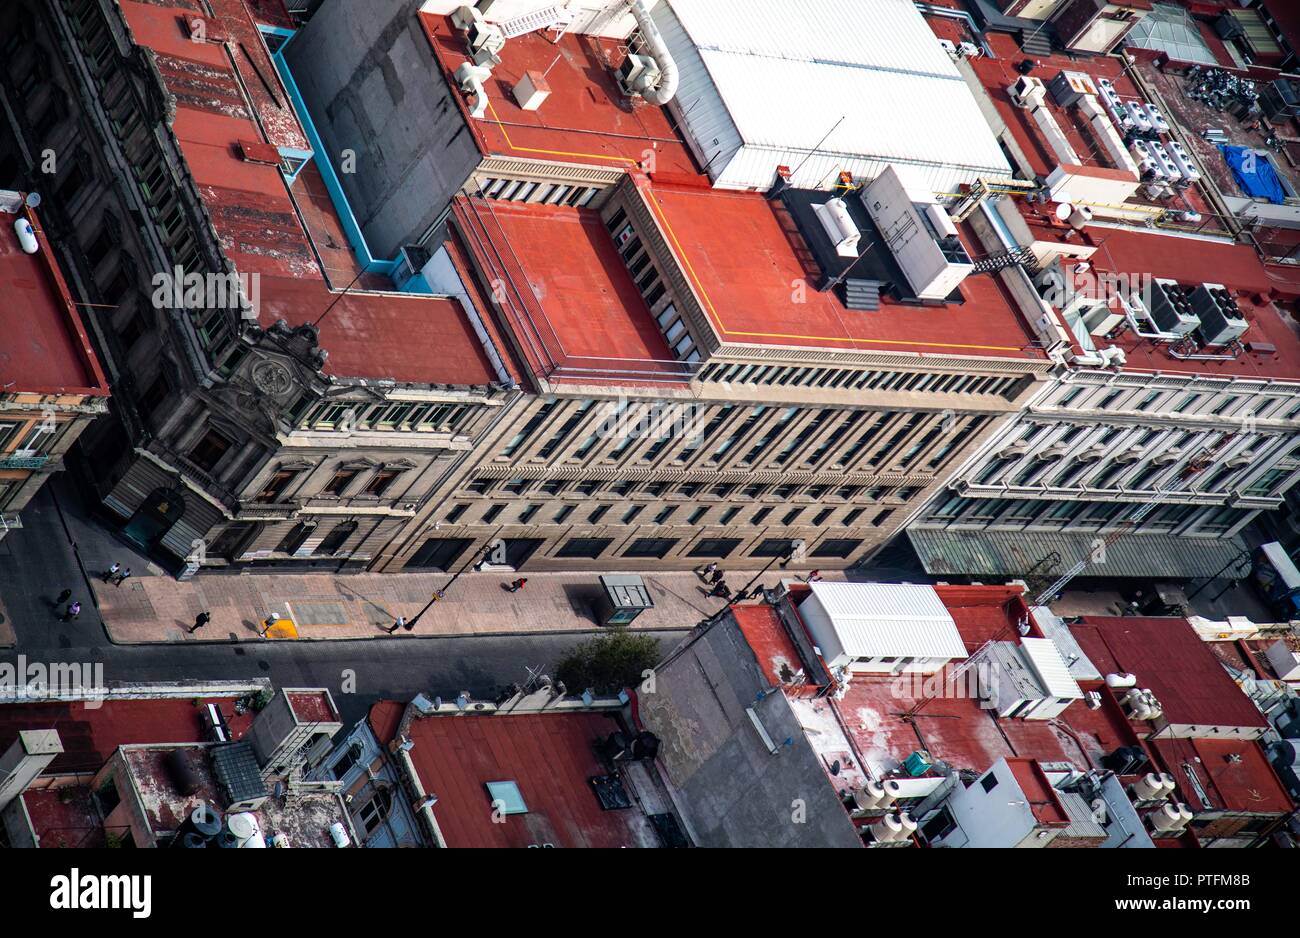 high angle view of the Historic Center of Mexico City. (Photo: Luis Gutierrez / NortePhoto.com) vista de angulo alto del centro Historico de la Ciudad de Mexico. (Foto: Luis Gutierrez / NortePhoto.com) Stock Photo